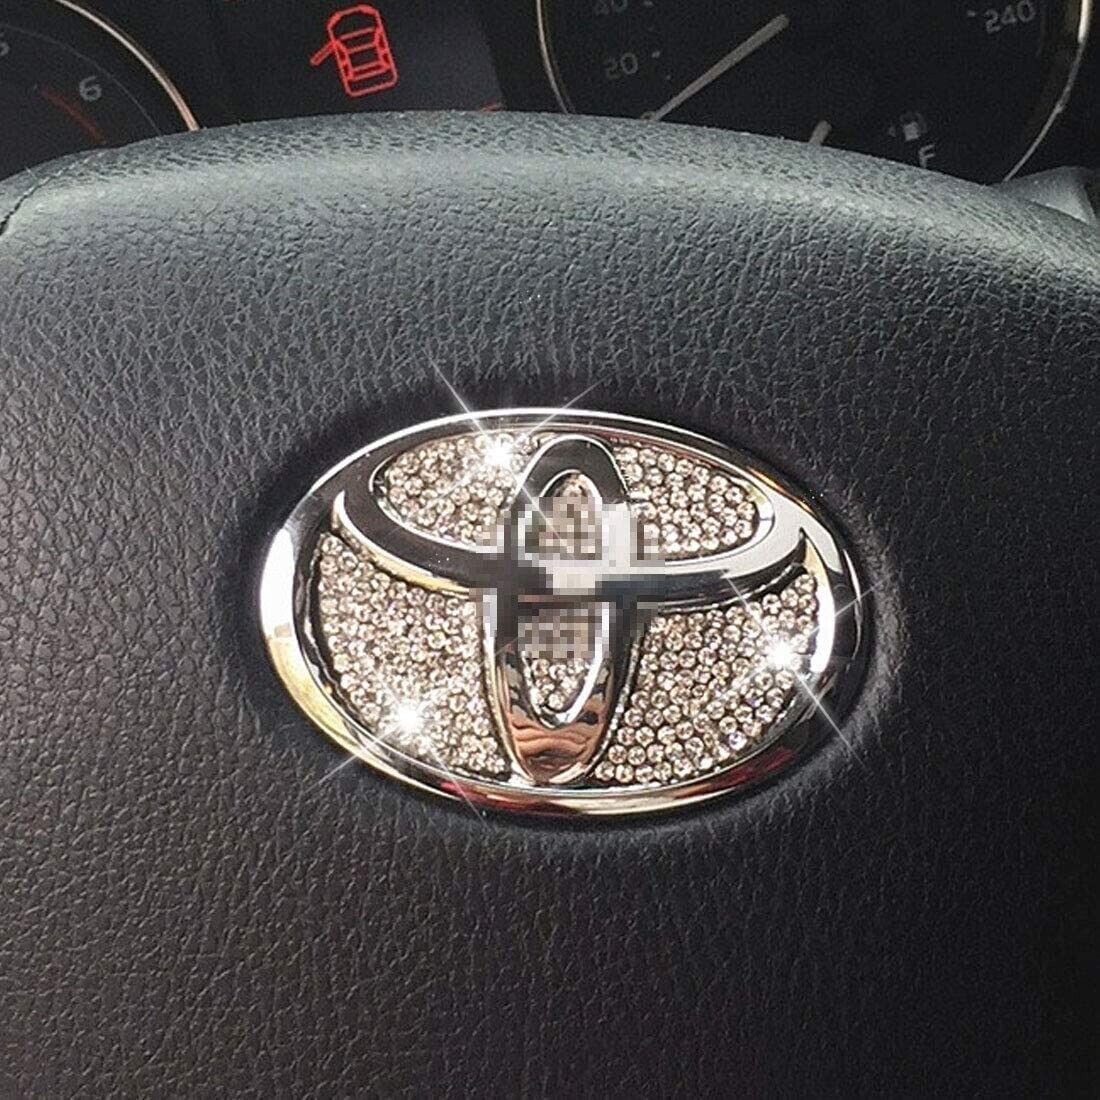 Kaufe Bling Lenkrad Emblem Aufkleber Kristall Aufkleber Zubehör Dekoration  für Toyota Camry Corolla Rav4 4runner Highlander